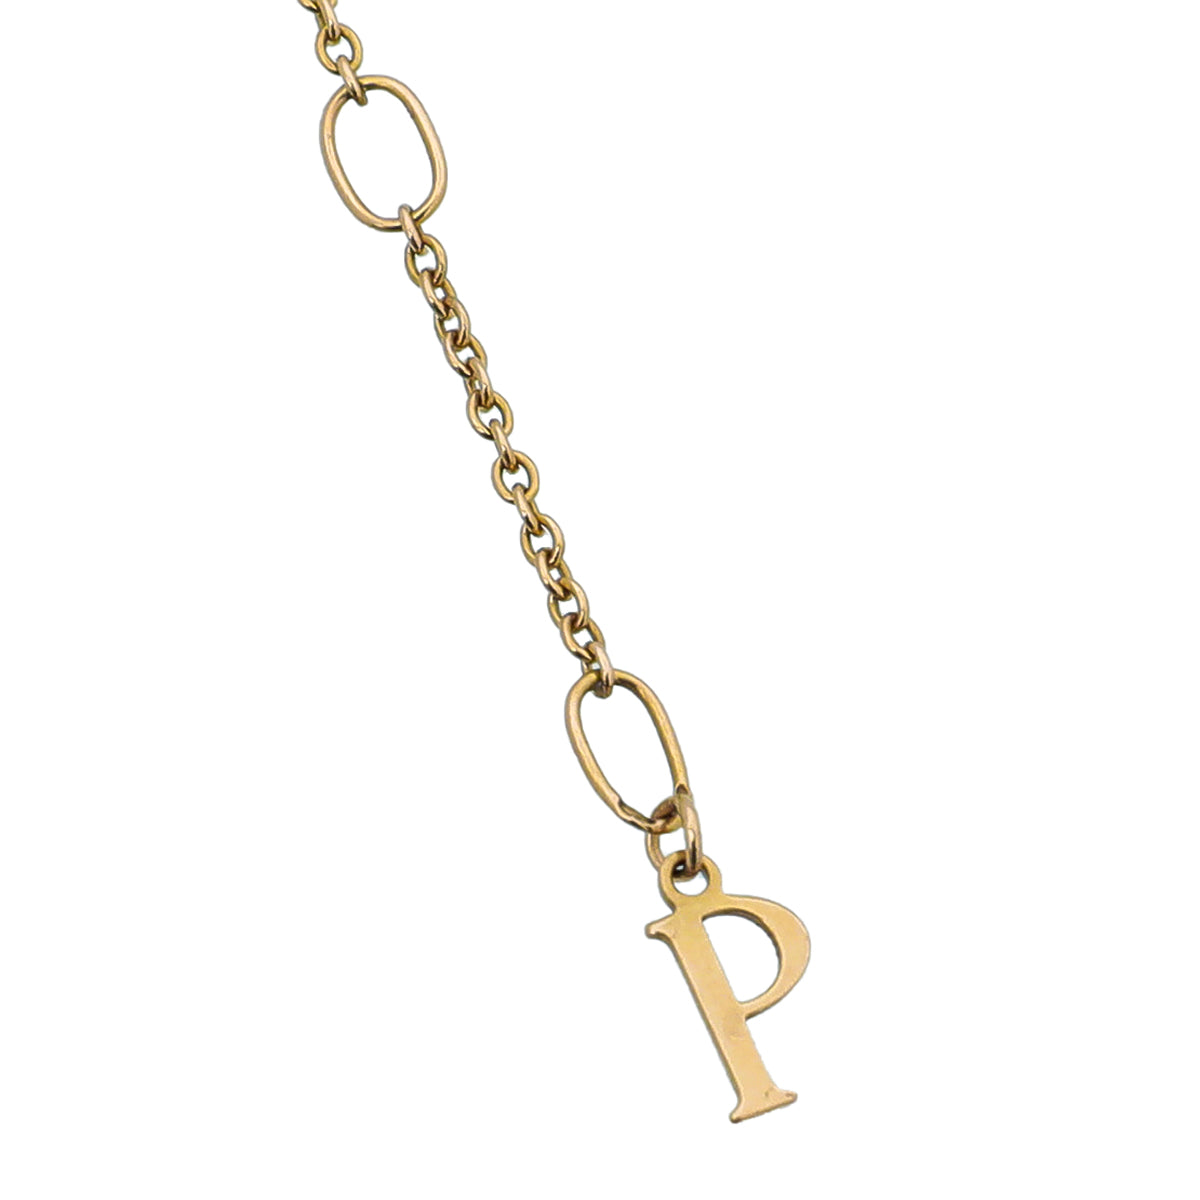 Piaget 18K Rose Gold Onyx 1 Diamond Possession Bracelet